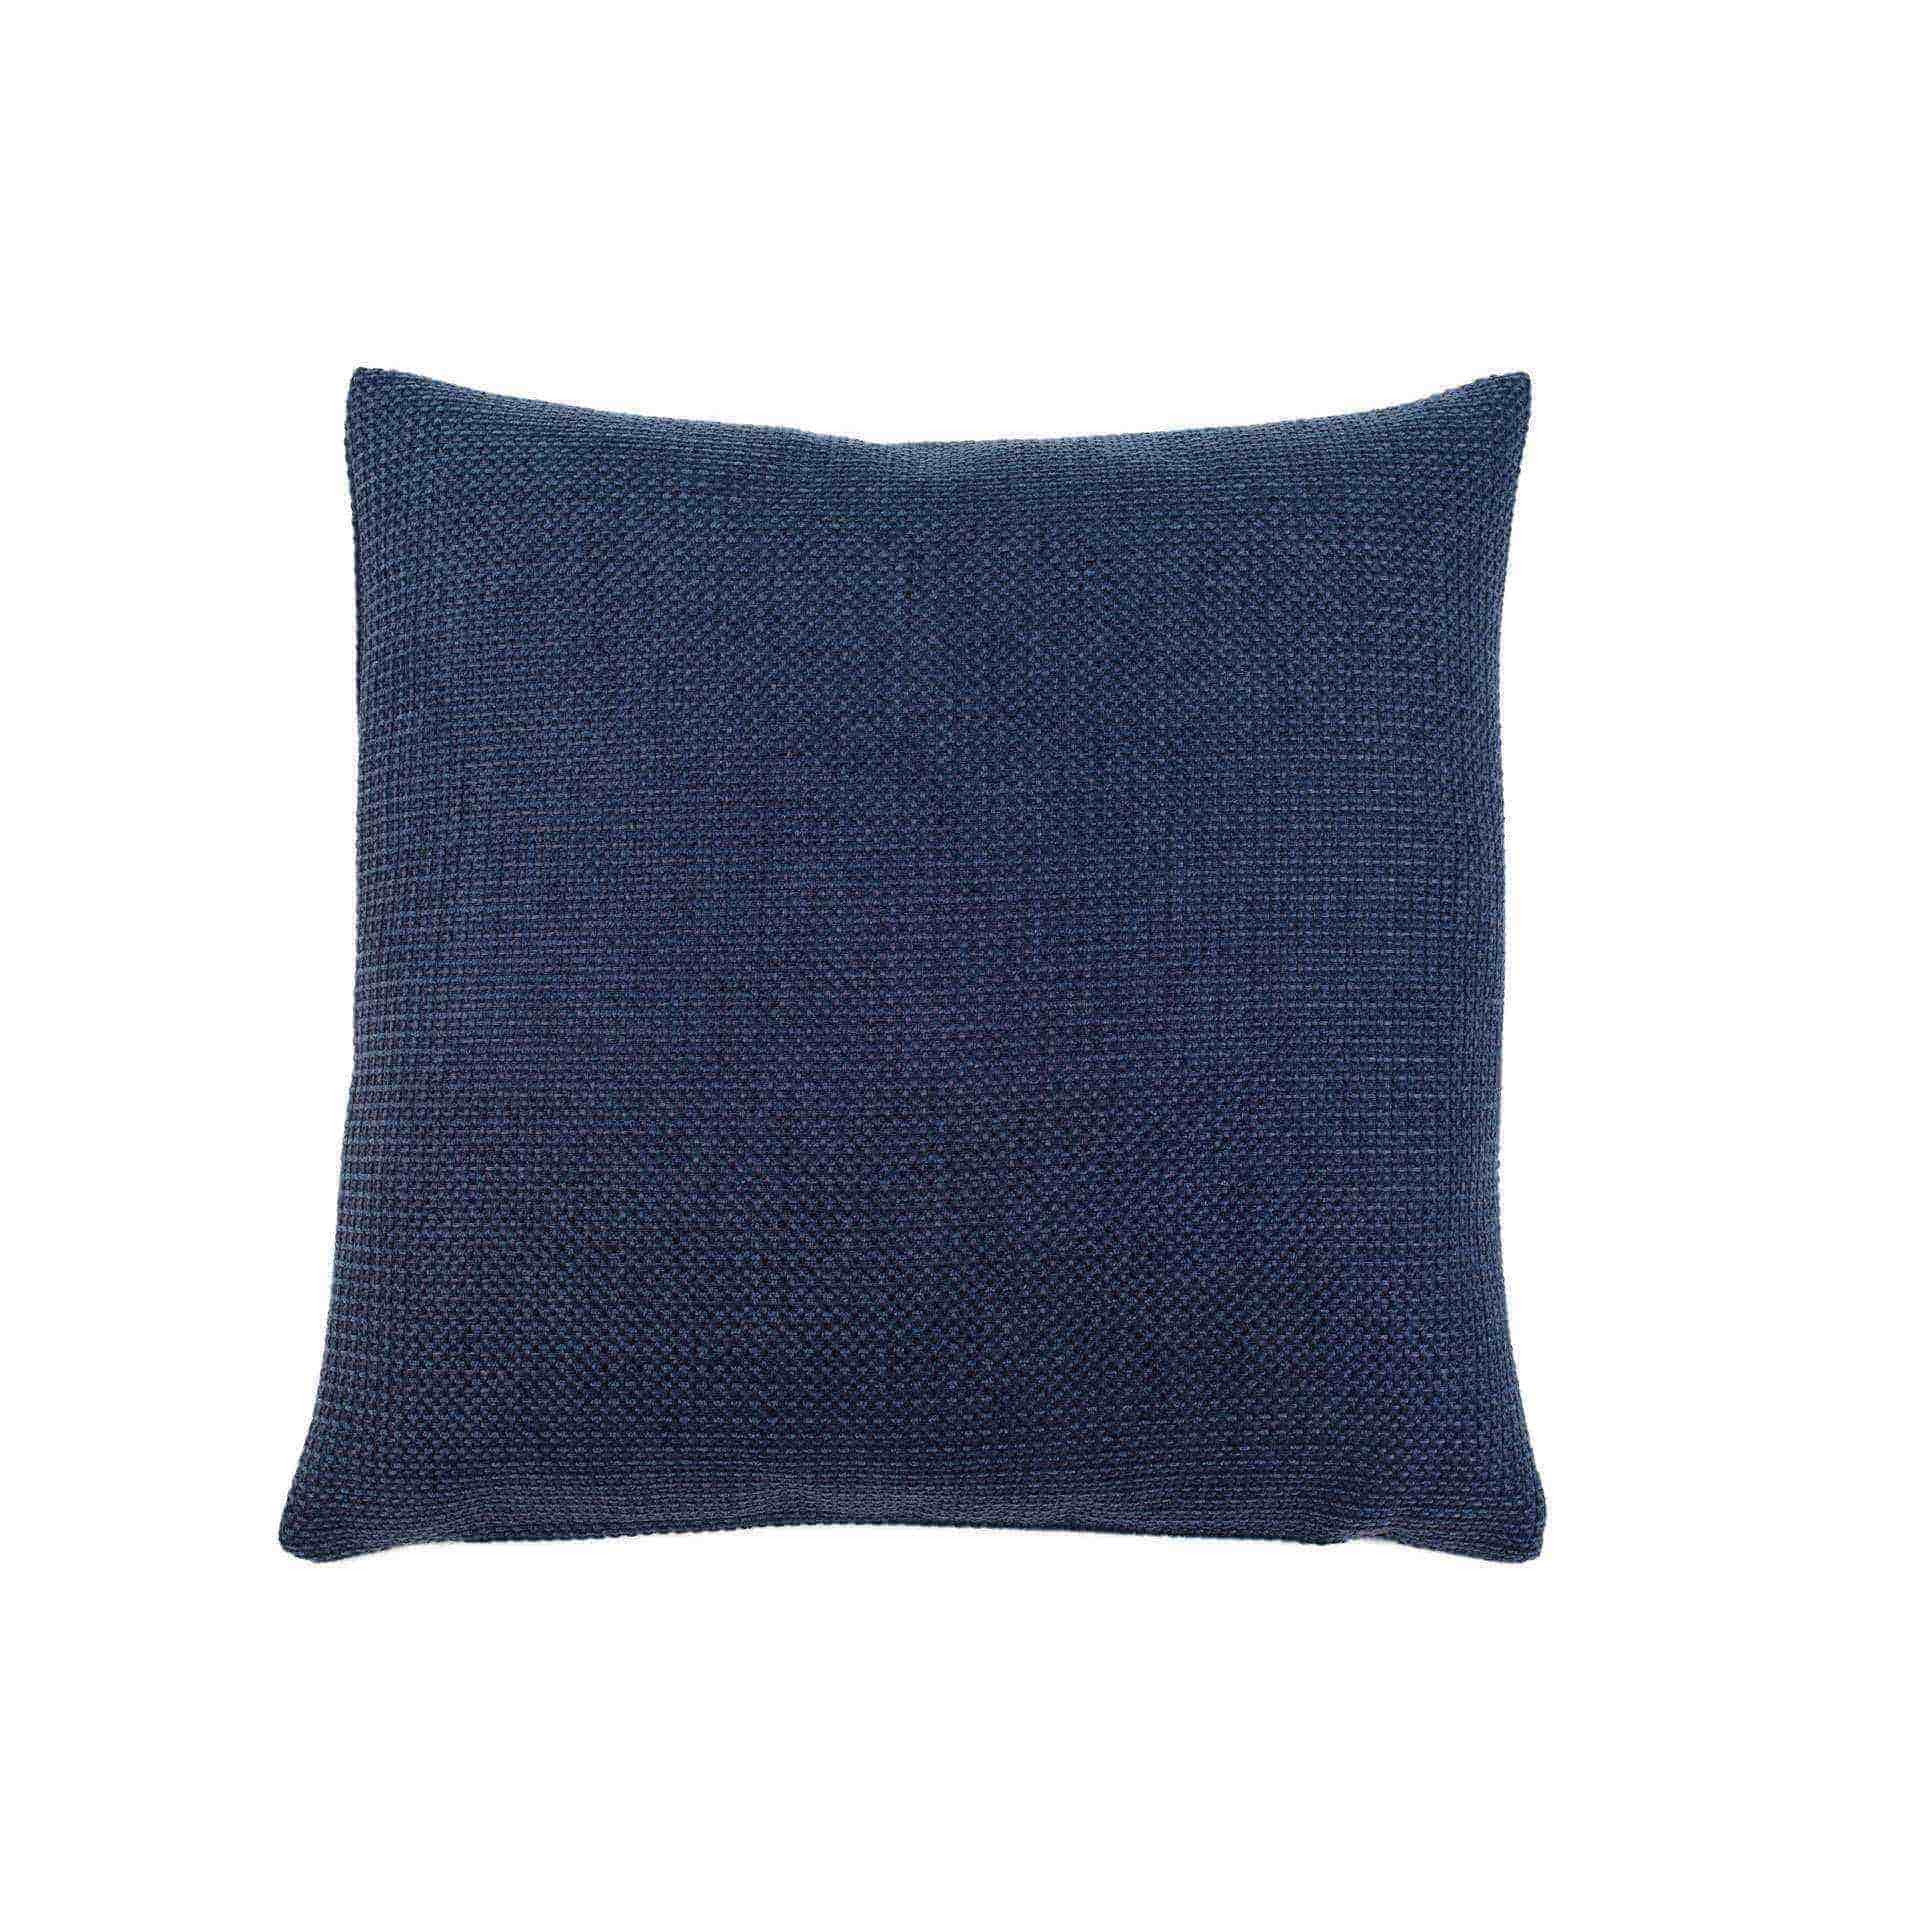 Kissenhülle - mit Reißverschluss - Serie DALLAS - dunkelblau - Abm. 60 x 60 cm - Polyester - 85083-51-6060-D